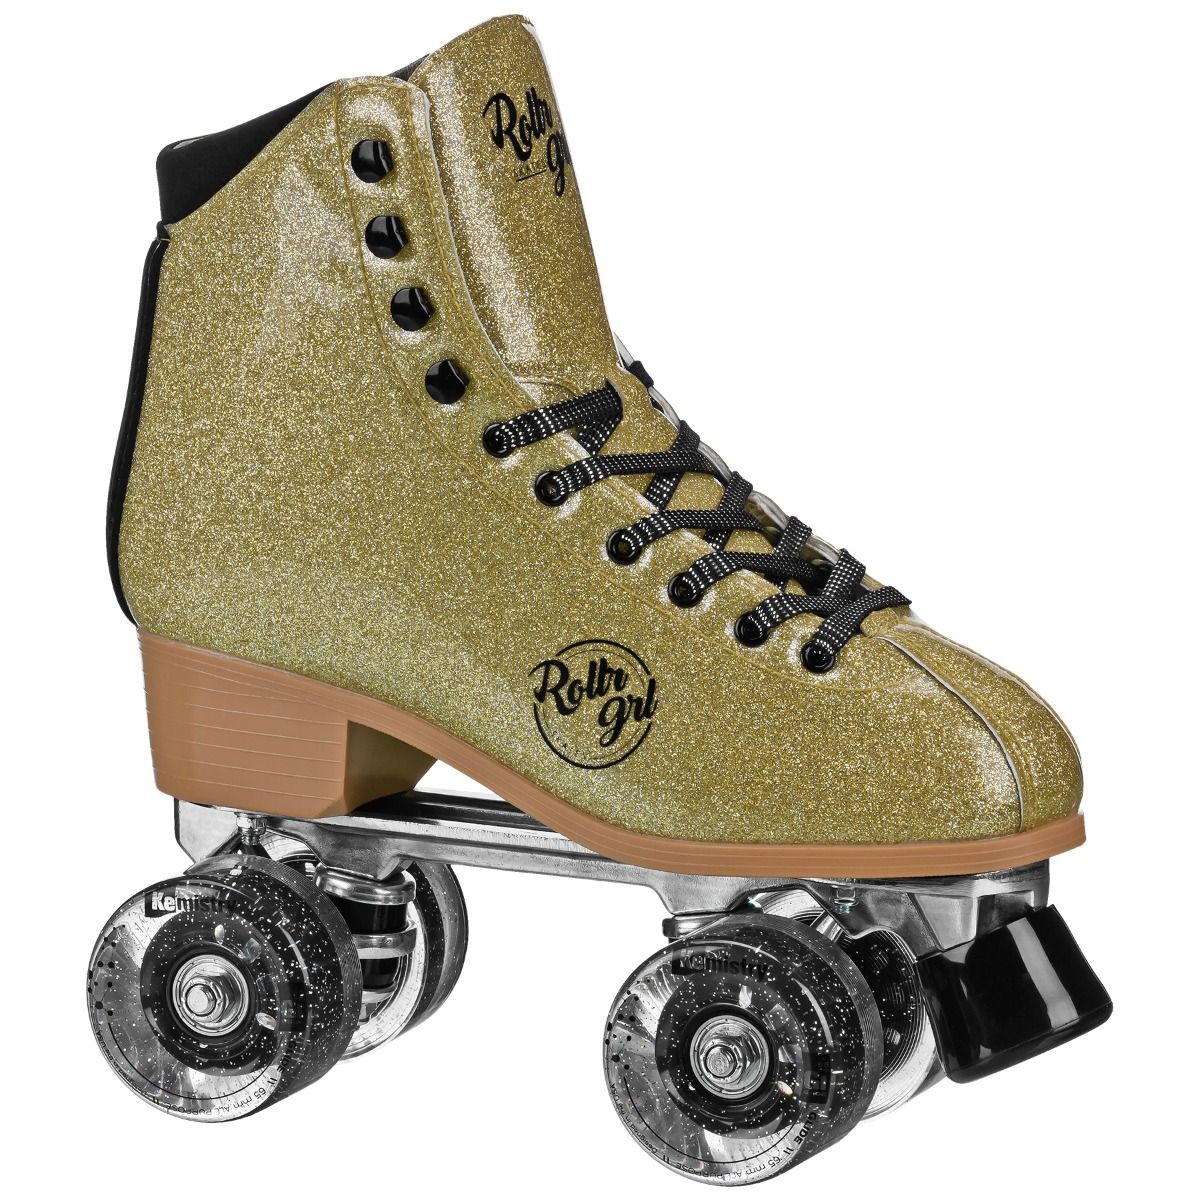 INSTOCK Ladies 6-11! Rollr Grl Gold Astra Outdoor Roller Skates!